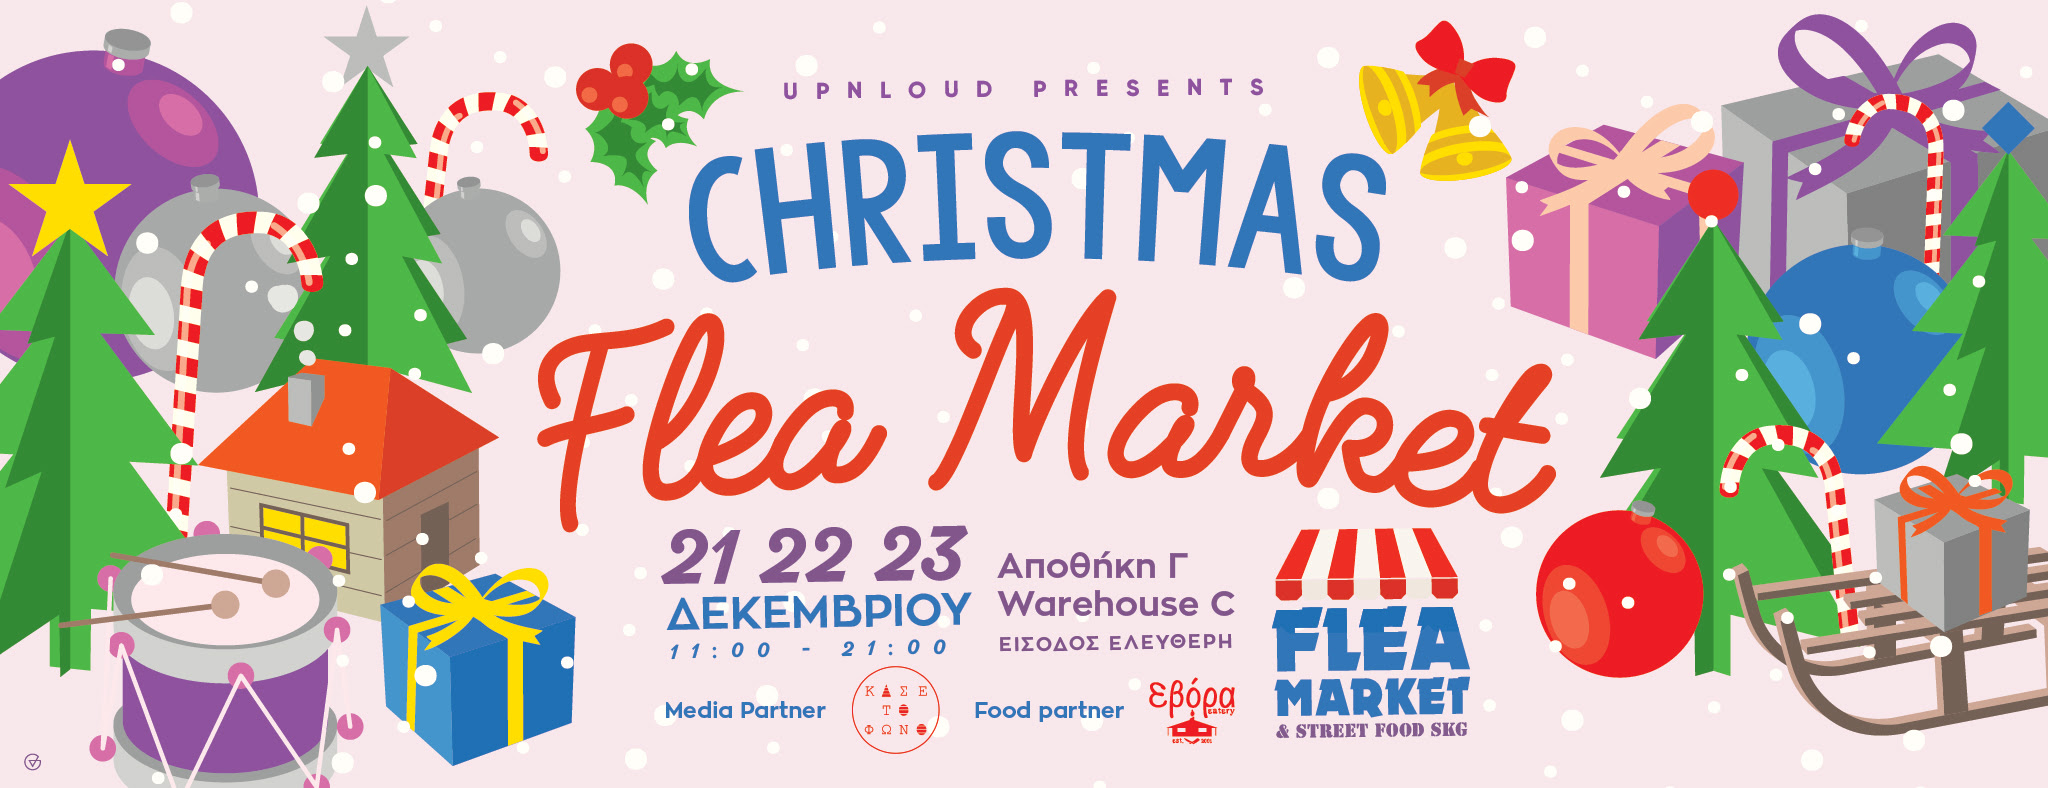 Thessaloniki Christmas Flea Market & Street Food - exostis